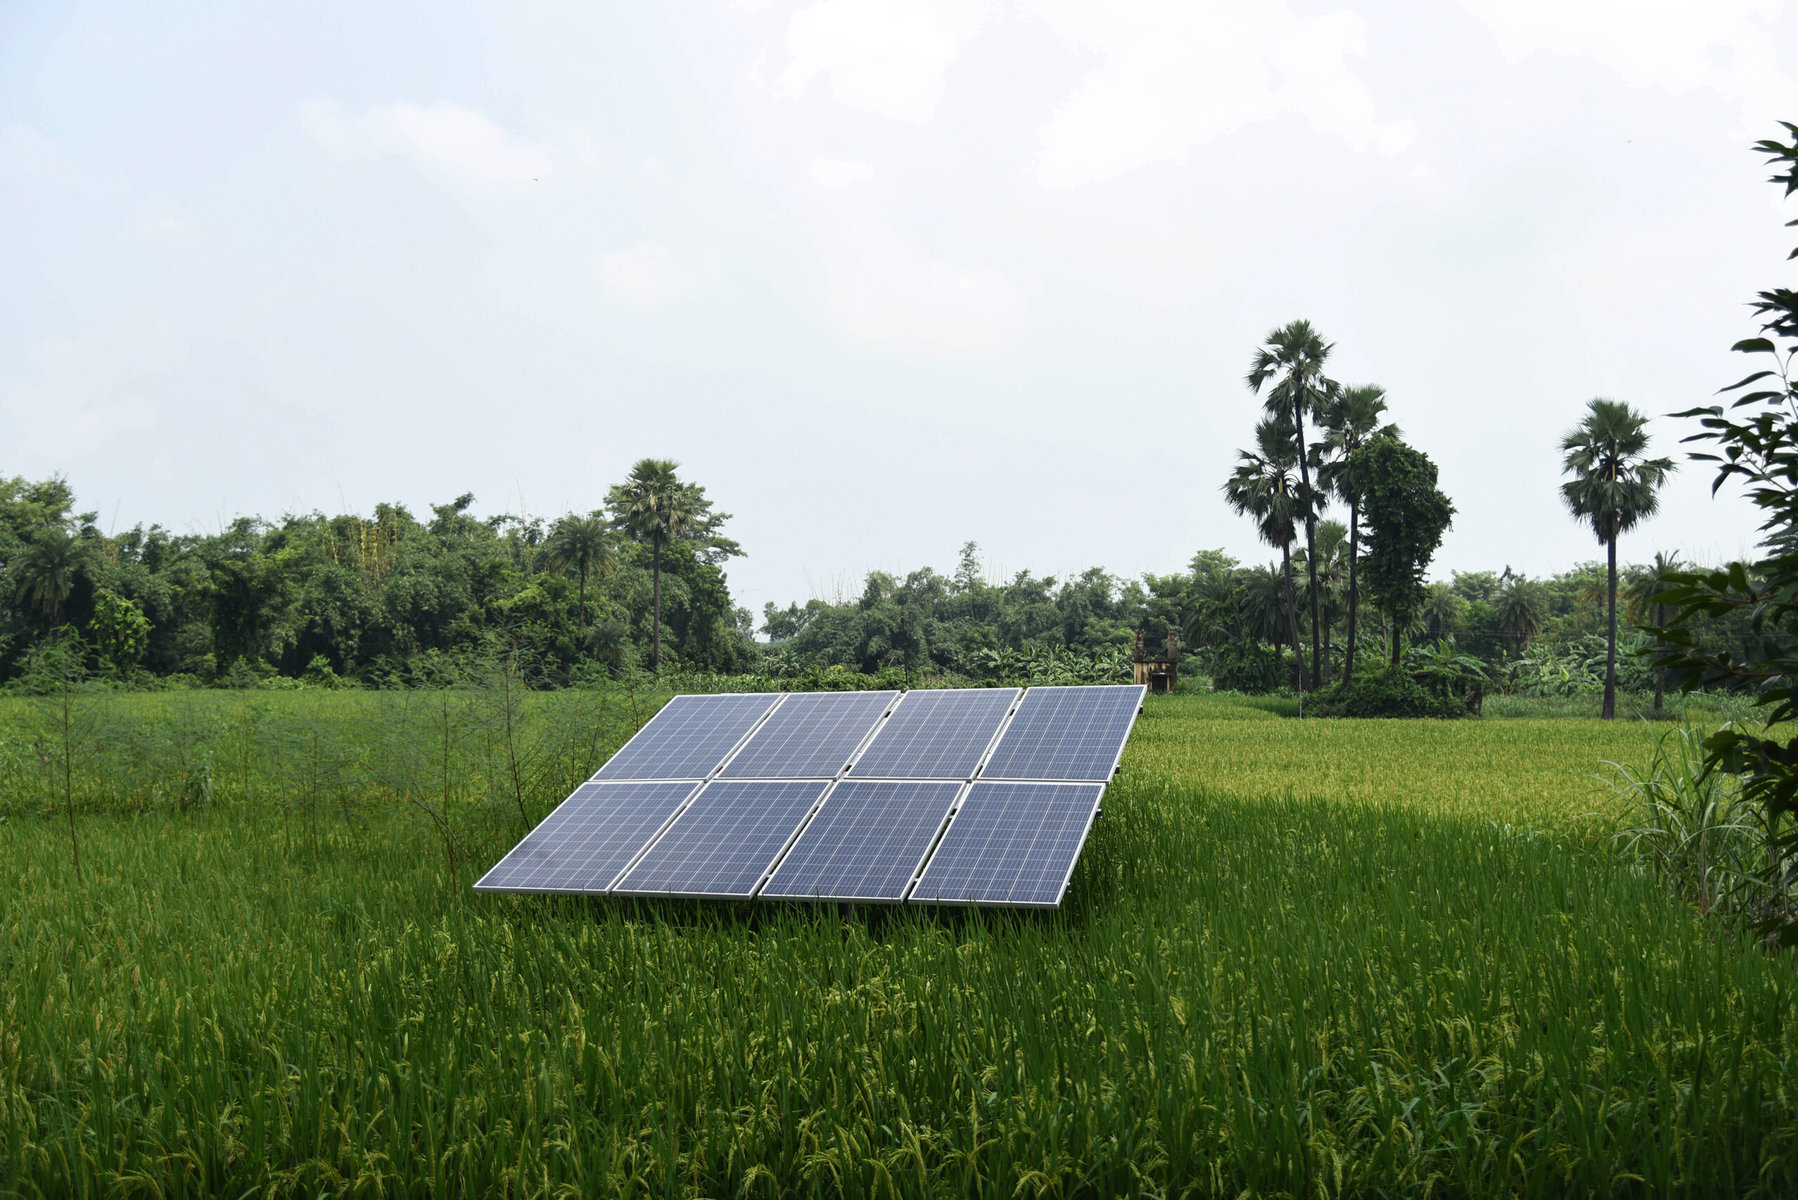 A solar panel installed at Ragho Majholi village under Bochaha block in Muzaffarpur district.